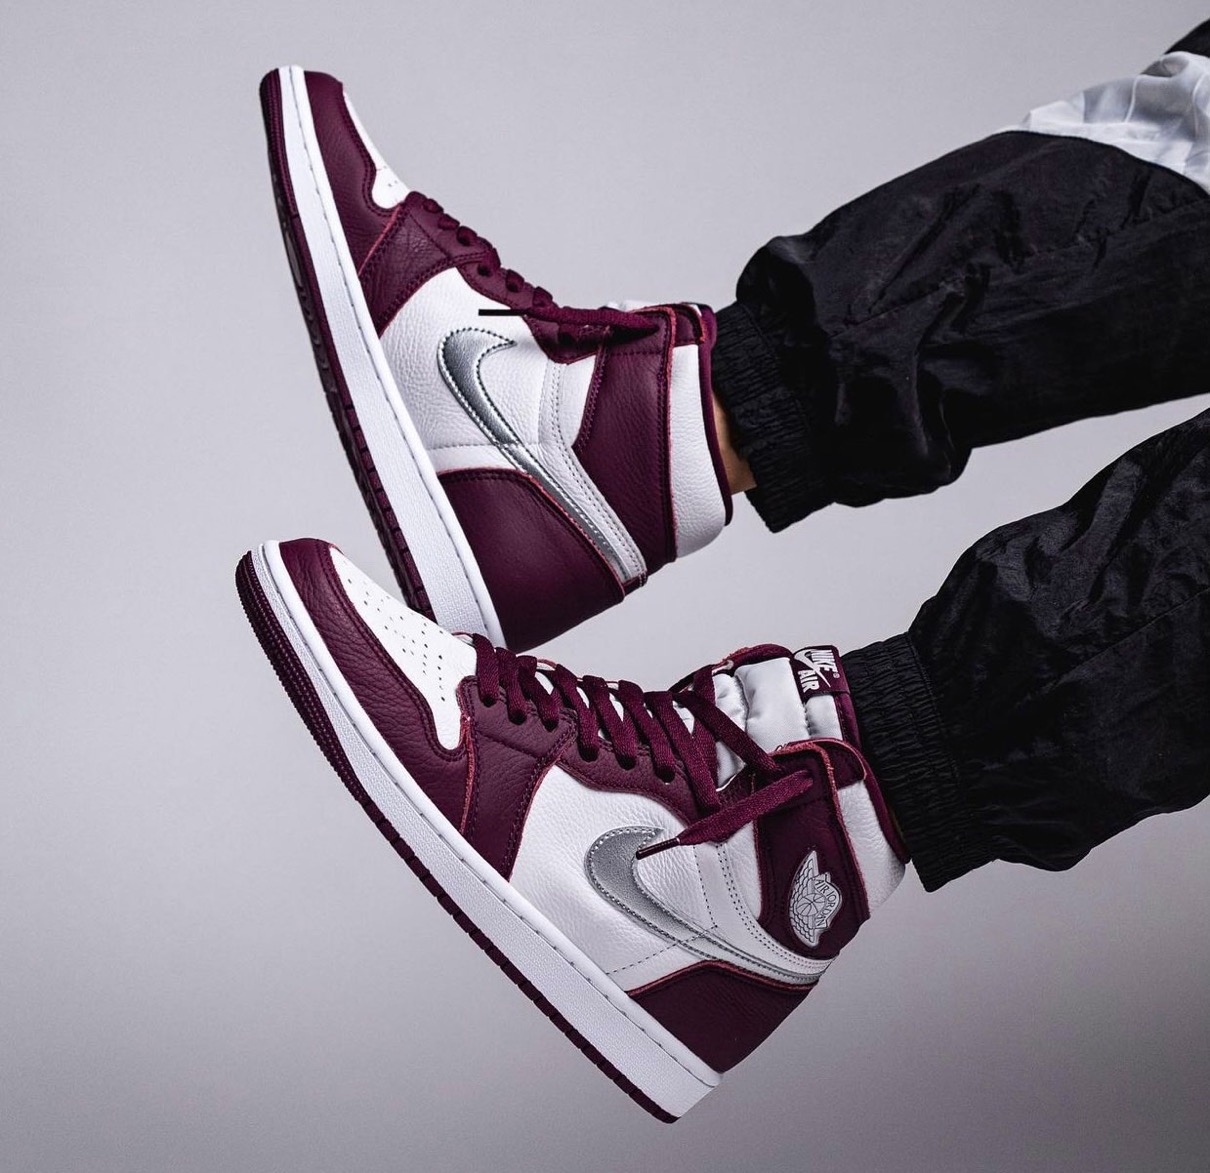 Nike】Air Jordan 1 Retro High OG “Bordeaux”が国内11月20日に発売 